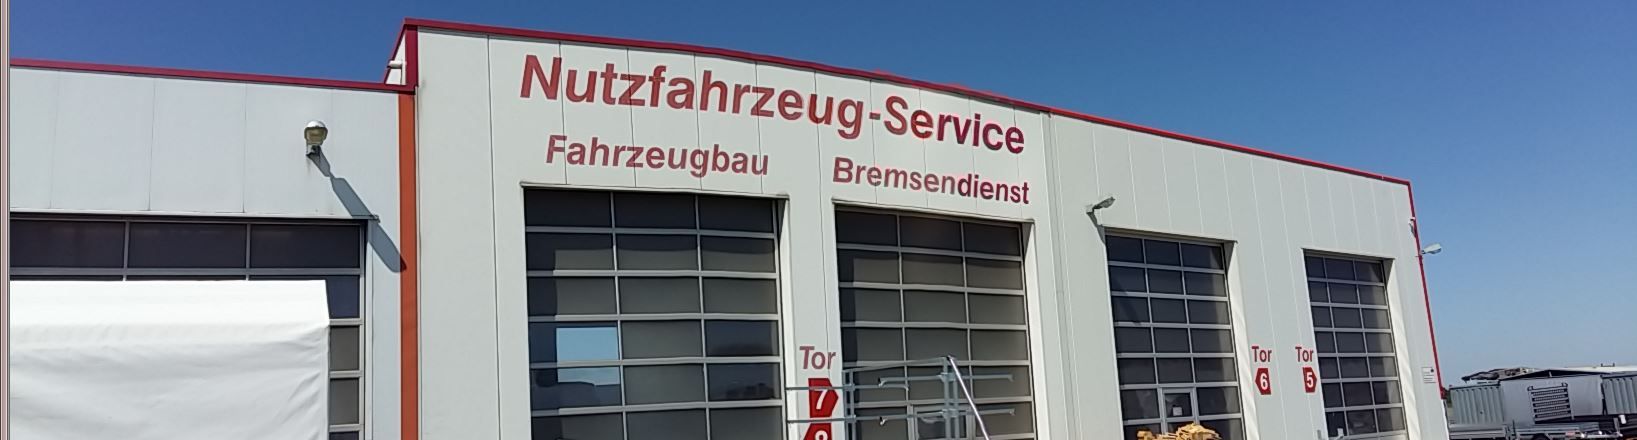 Anhänger & Fahrzeugbau SCHUHKNECHT GmbH